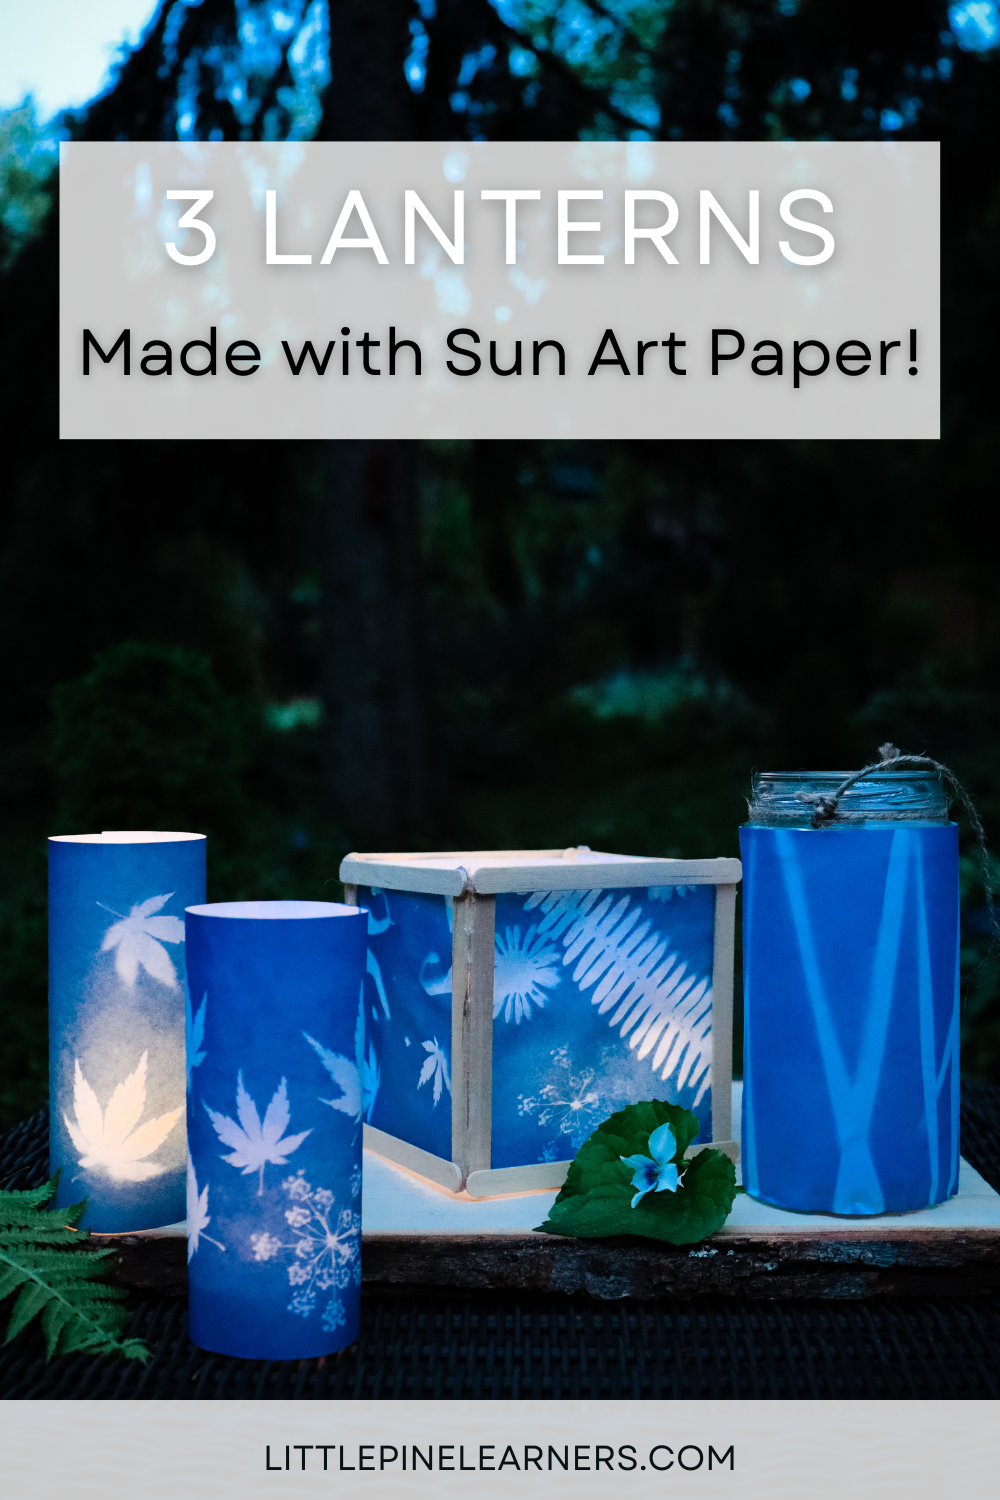 Sun Art Paper Lanterns